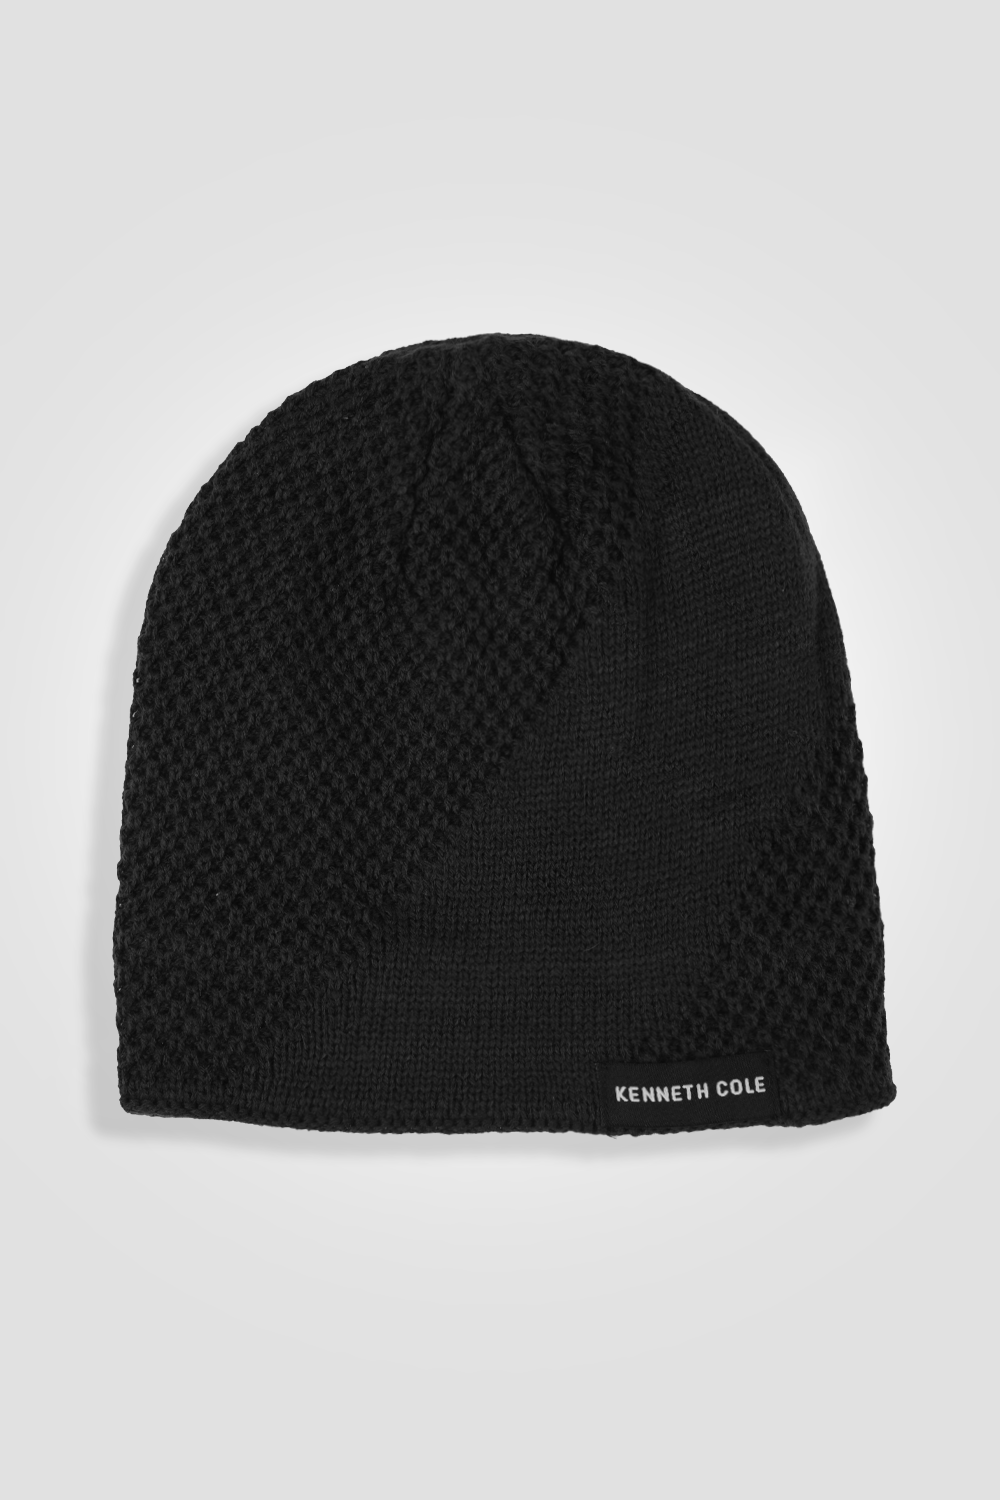 KENNETH COLE - כובע גרב לגבר בצבע שחור - MASHBIR//365